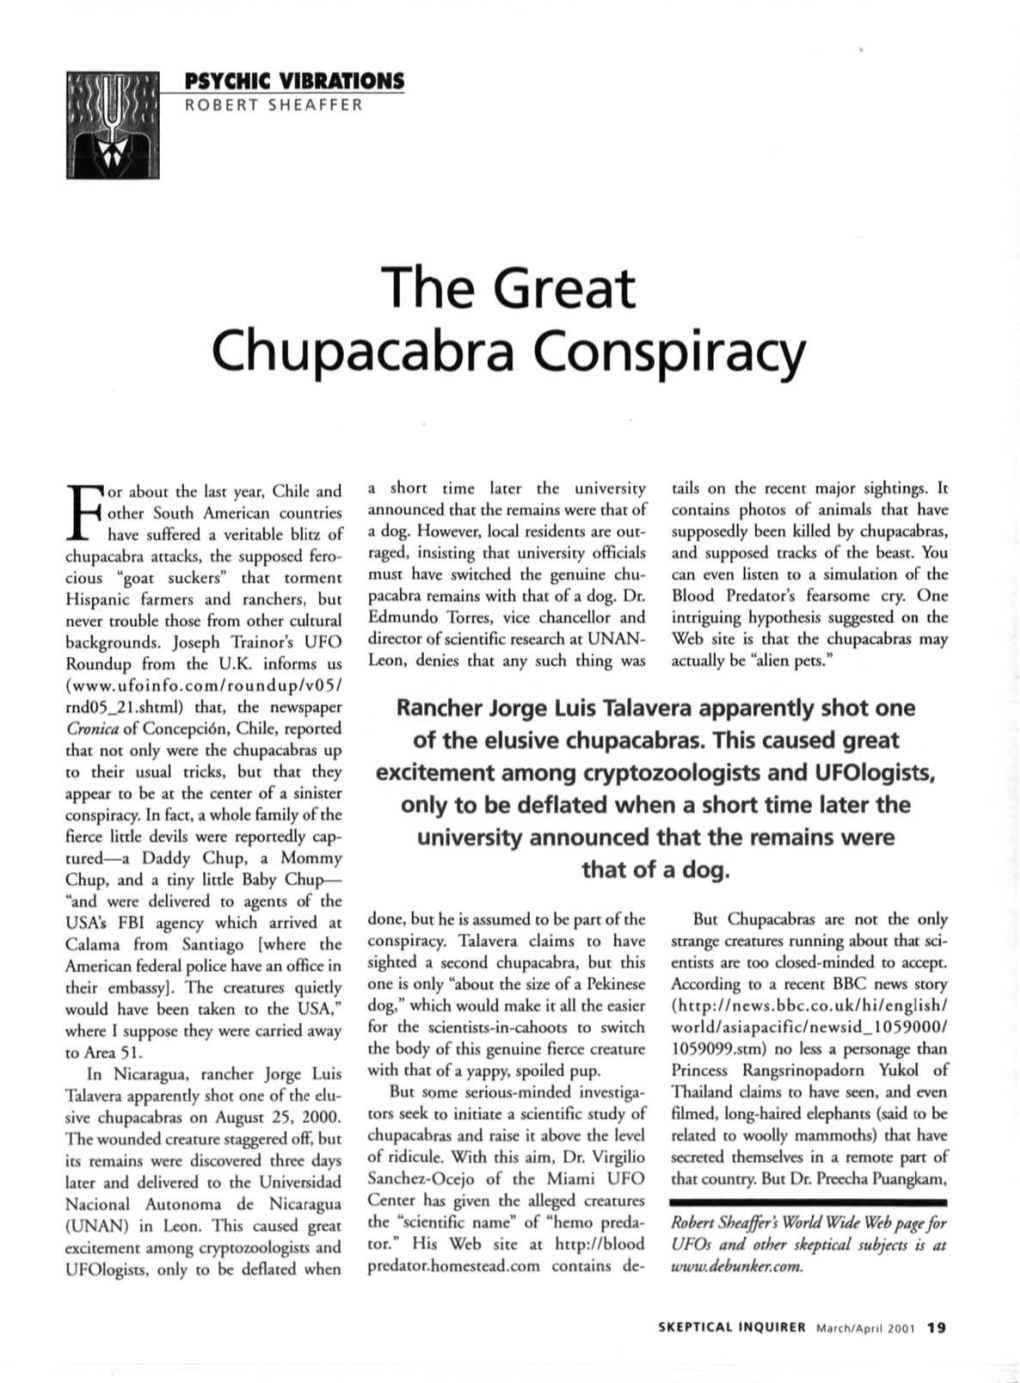 The Great Chupacabra Conspiracy